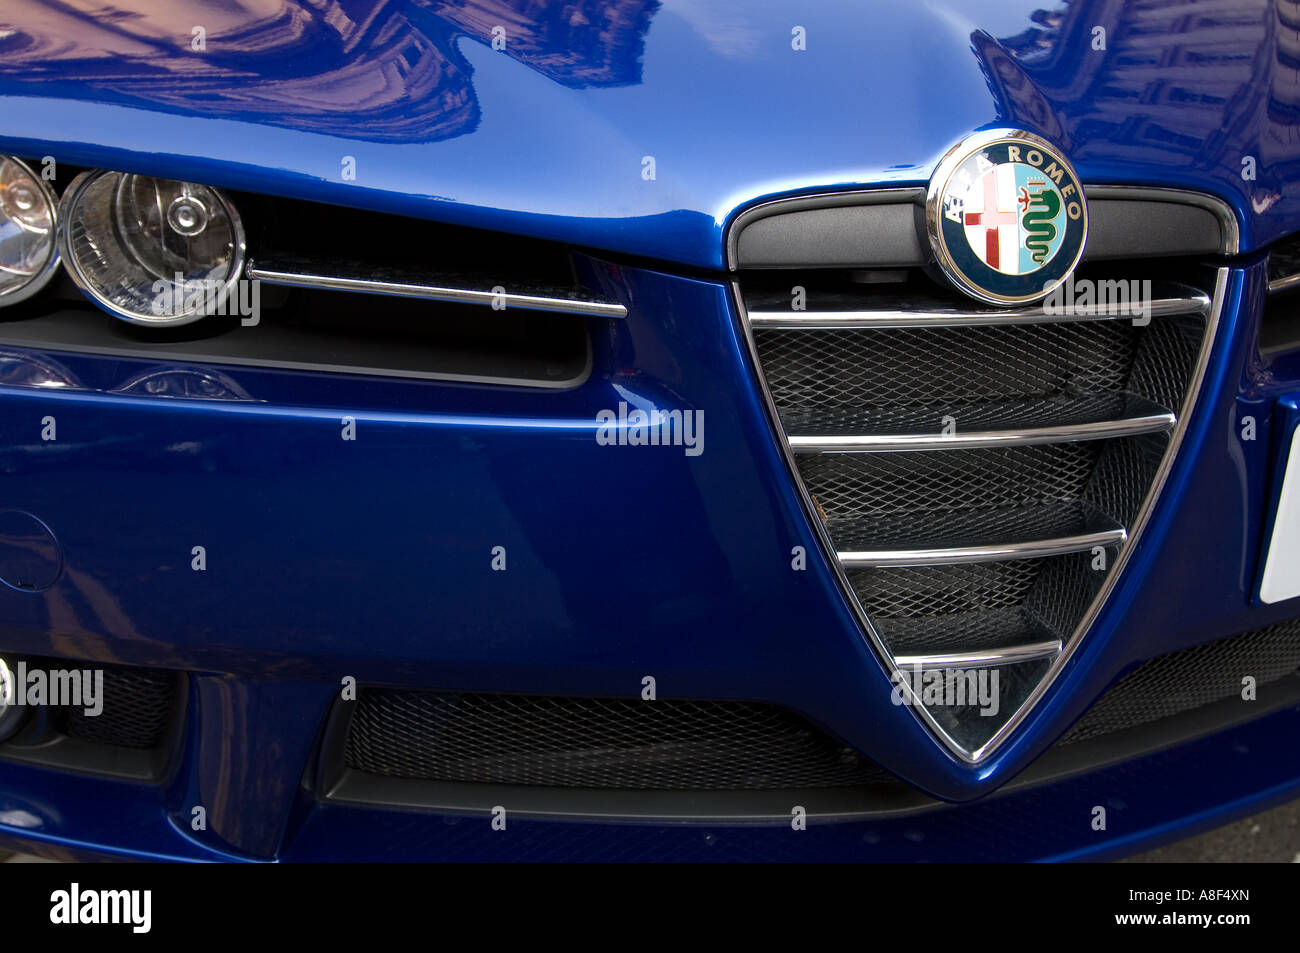 Alfa Romeo grill 159 new Stock Photo - Alamy